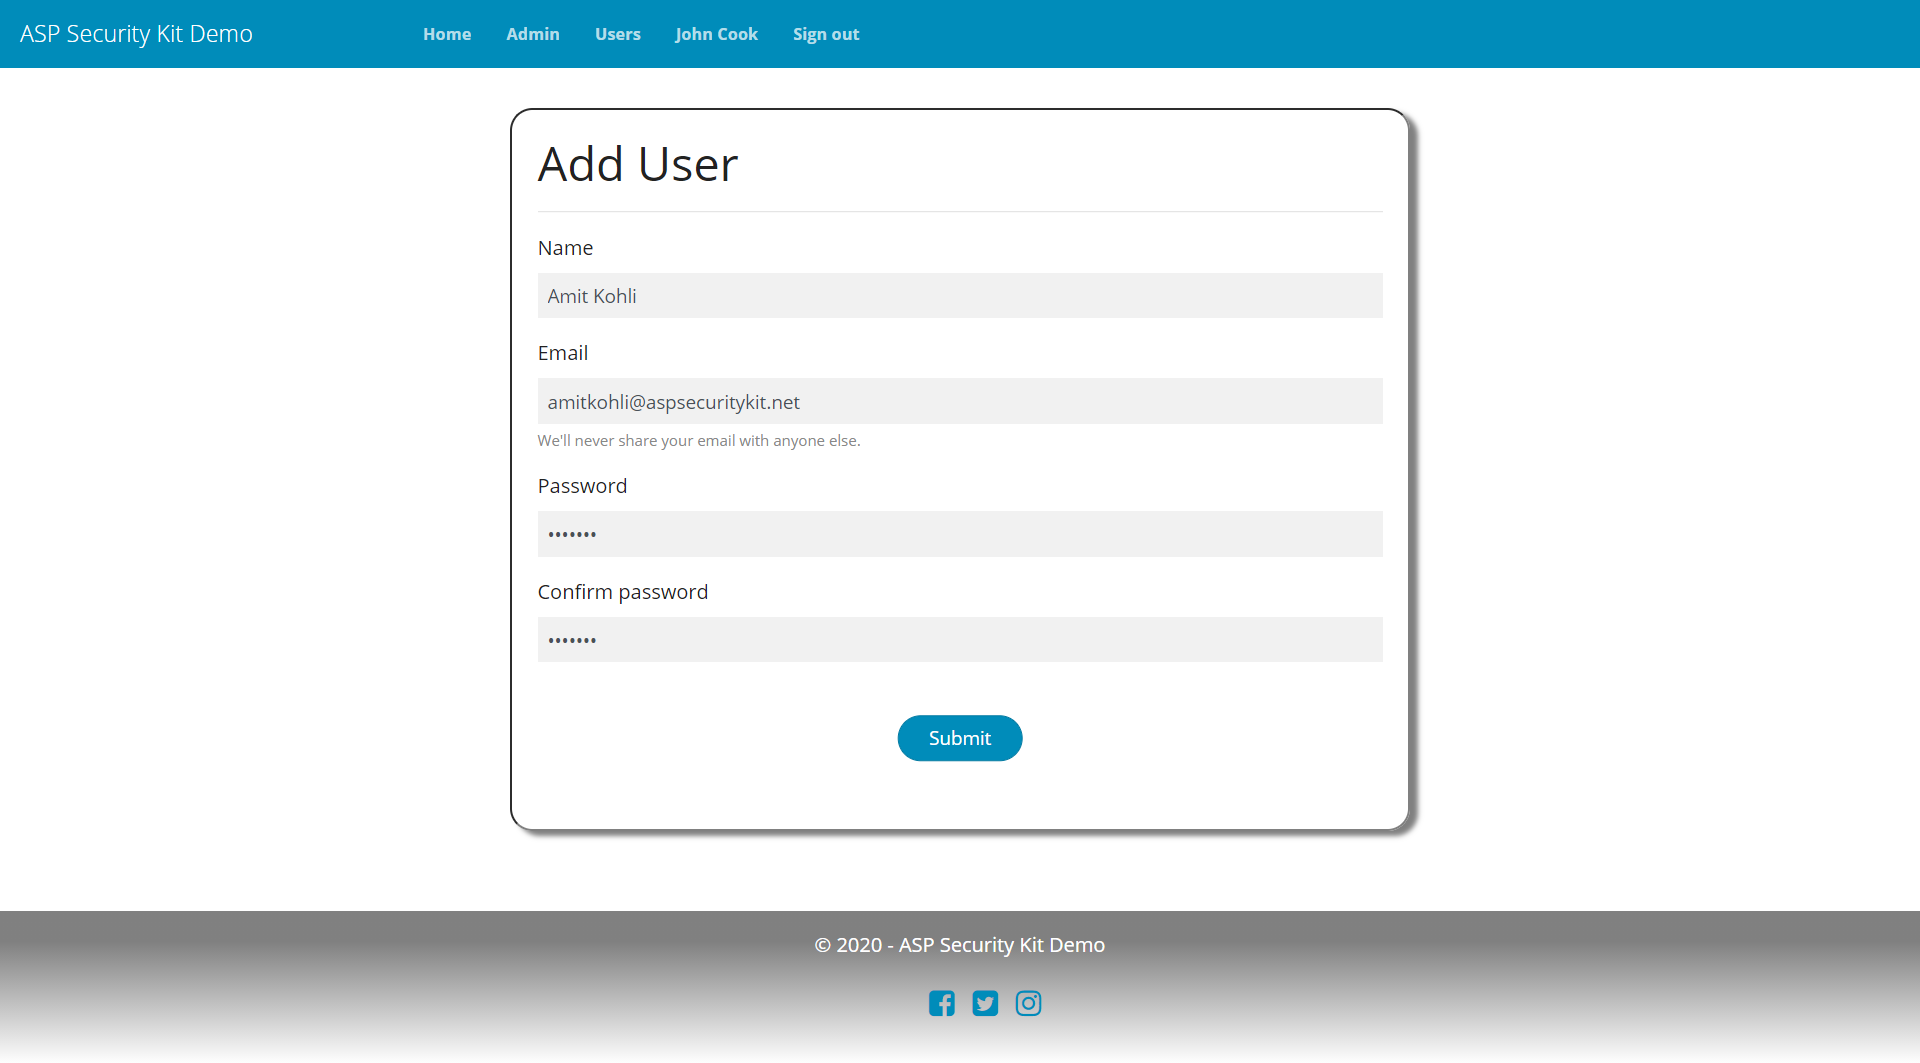 add new user form